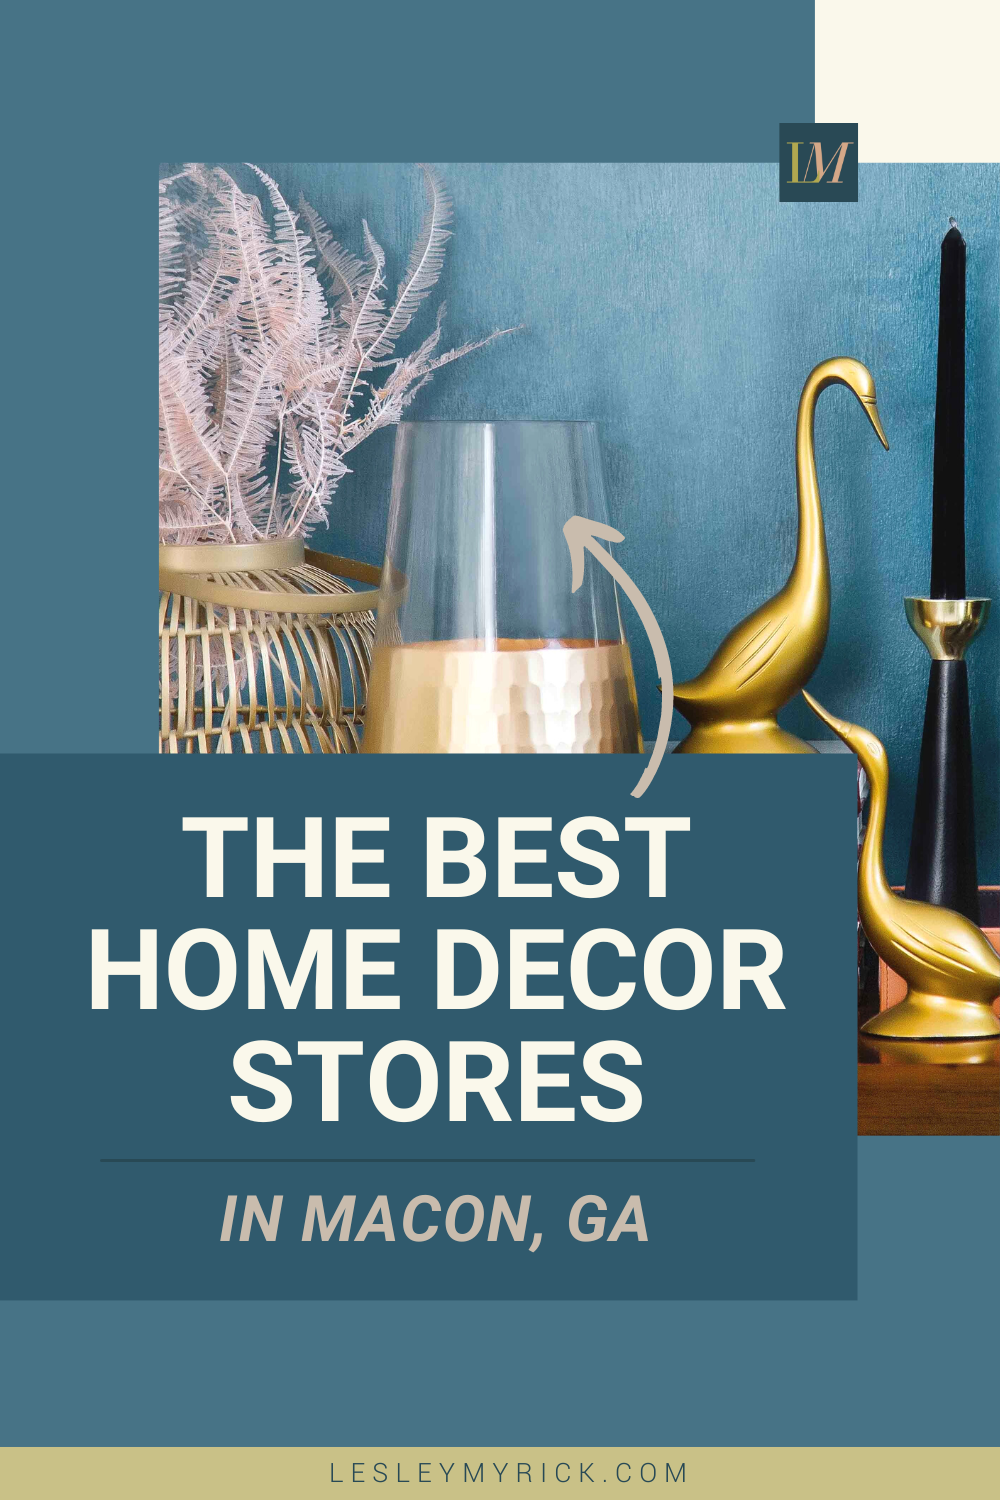 The 5 best home decor stores in Macon, GA from luxury interior designer Lesley Myrick